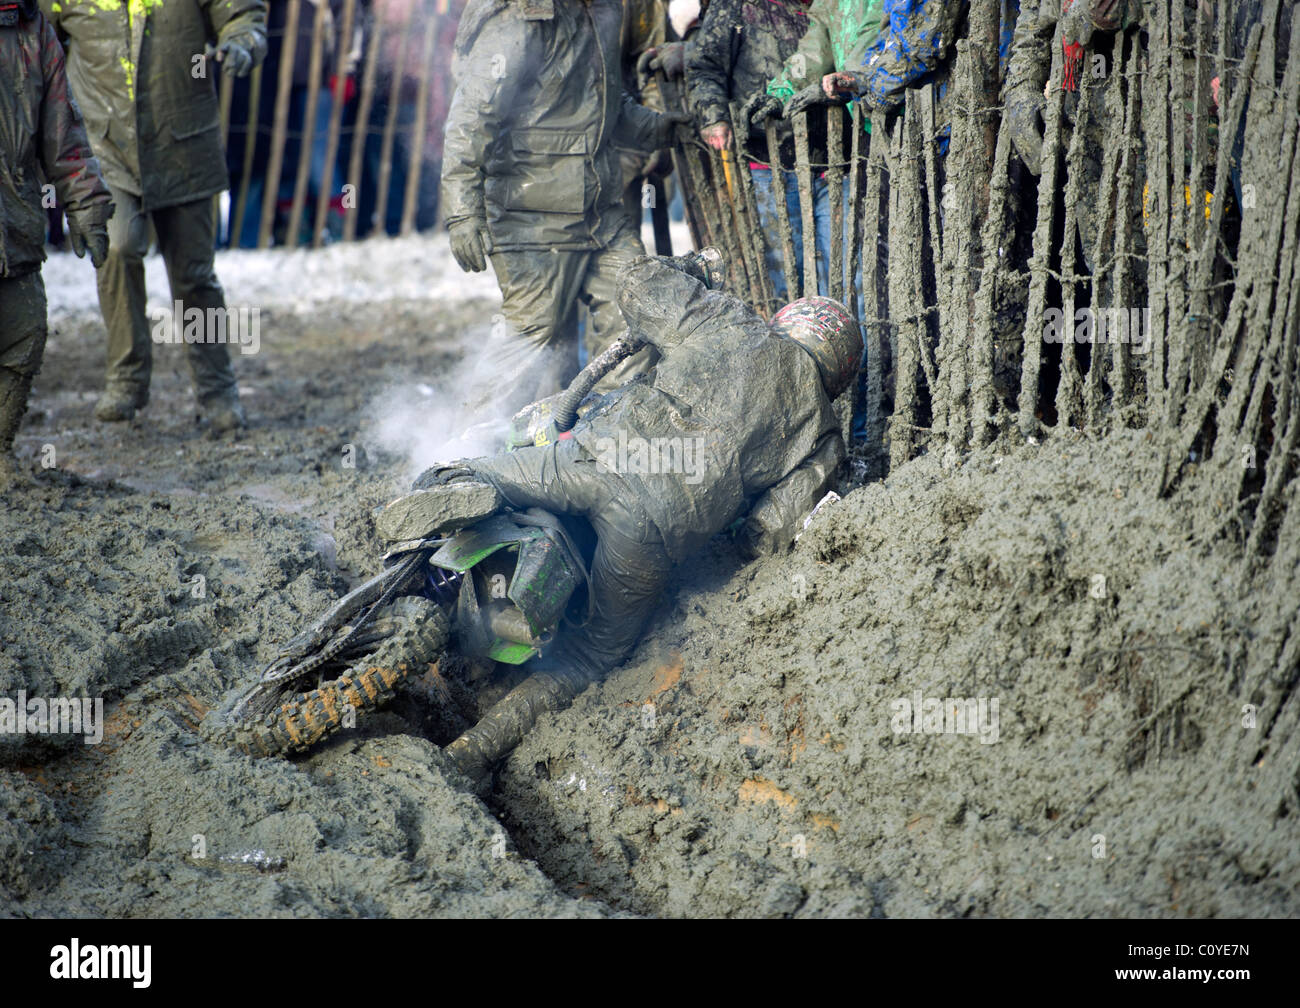 Man fallen off stuck in muddy motocross scrambling motorcycle bike in mud hole bog with steam rising Stock Photo